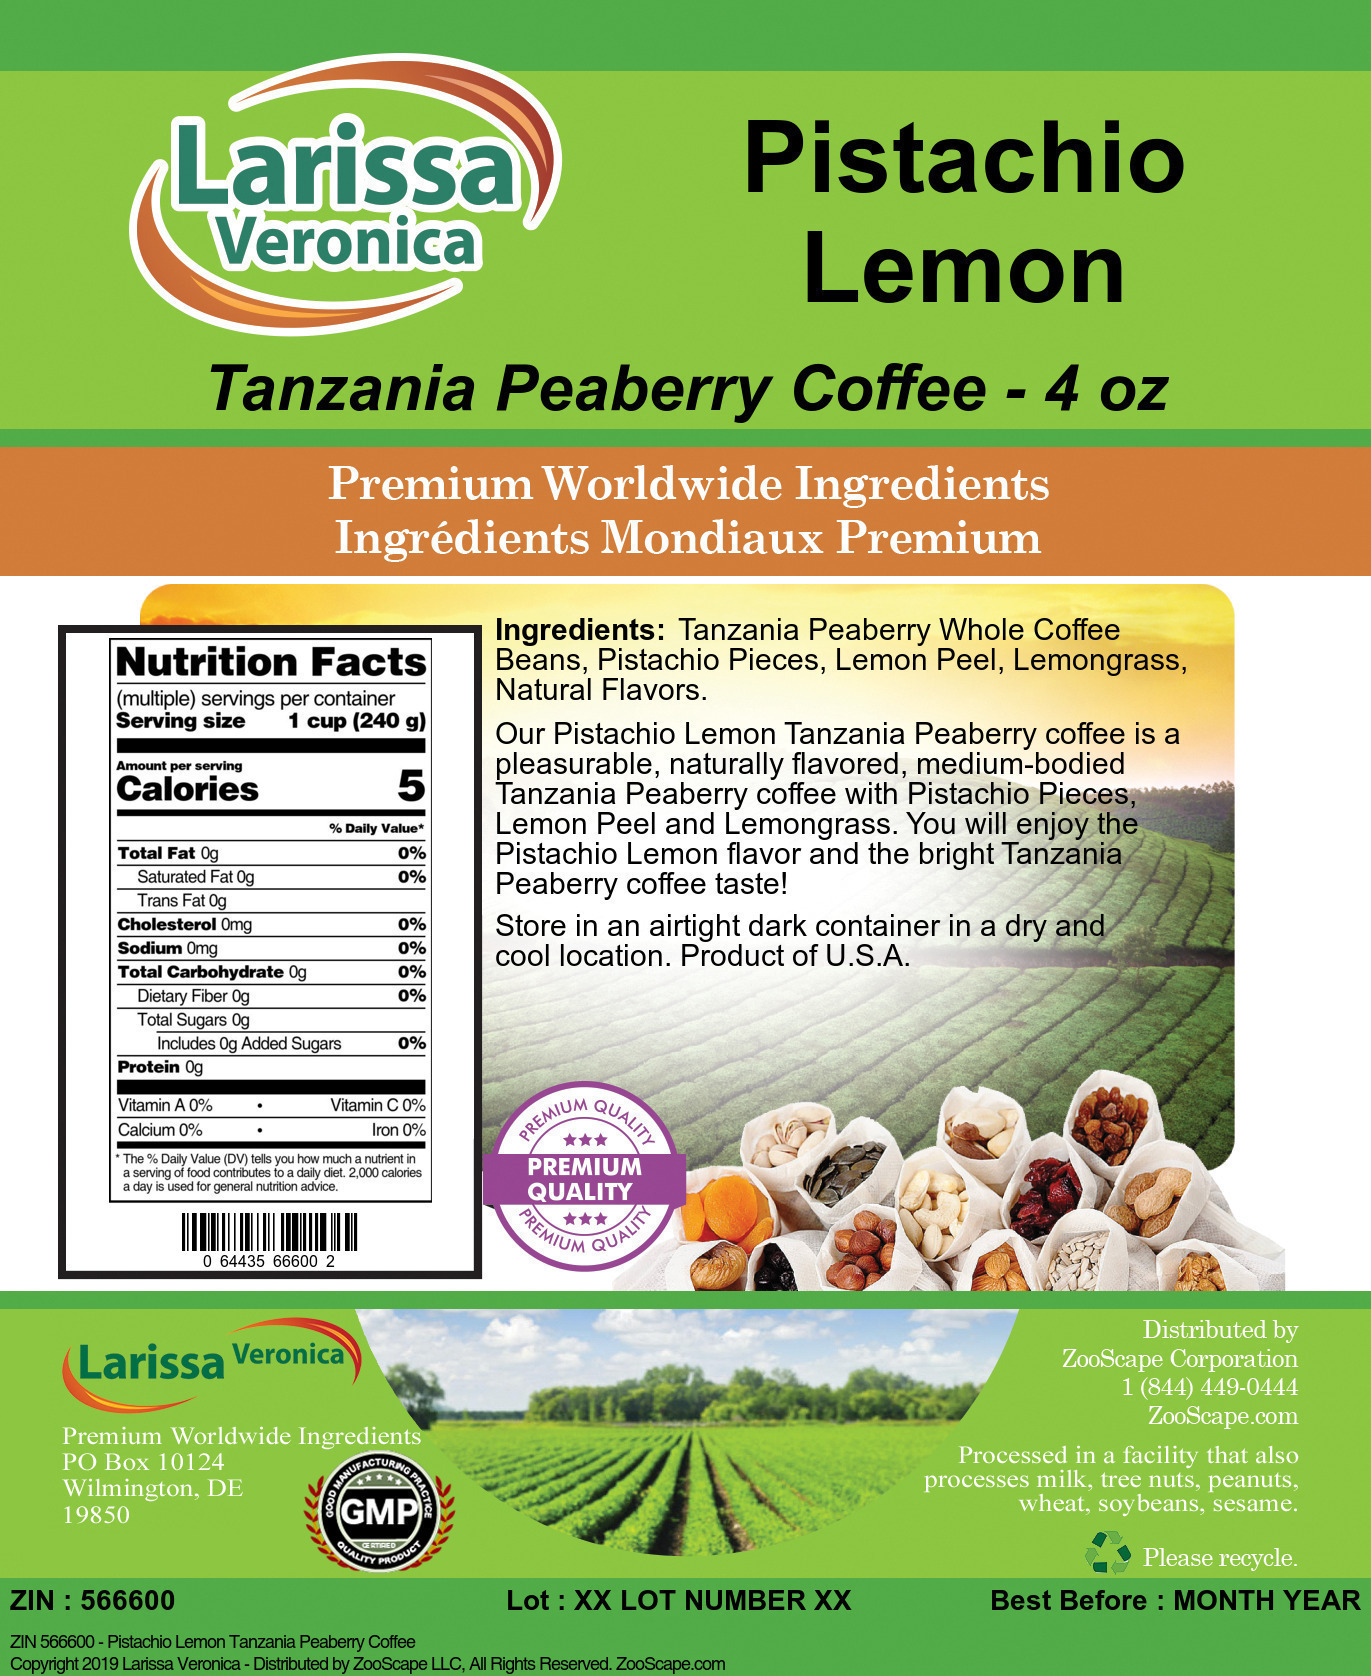 Pistachio Lemon Tanzania Peaberry Coffee - Label